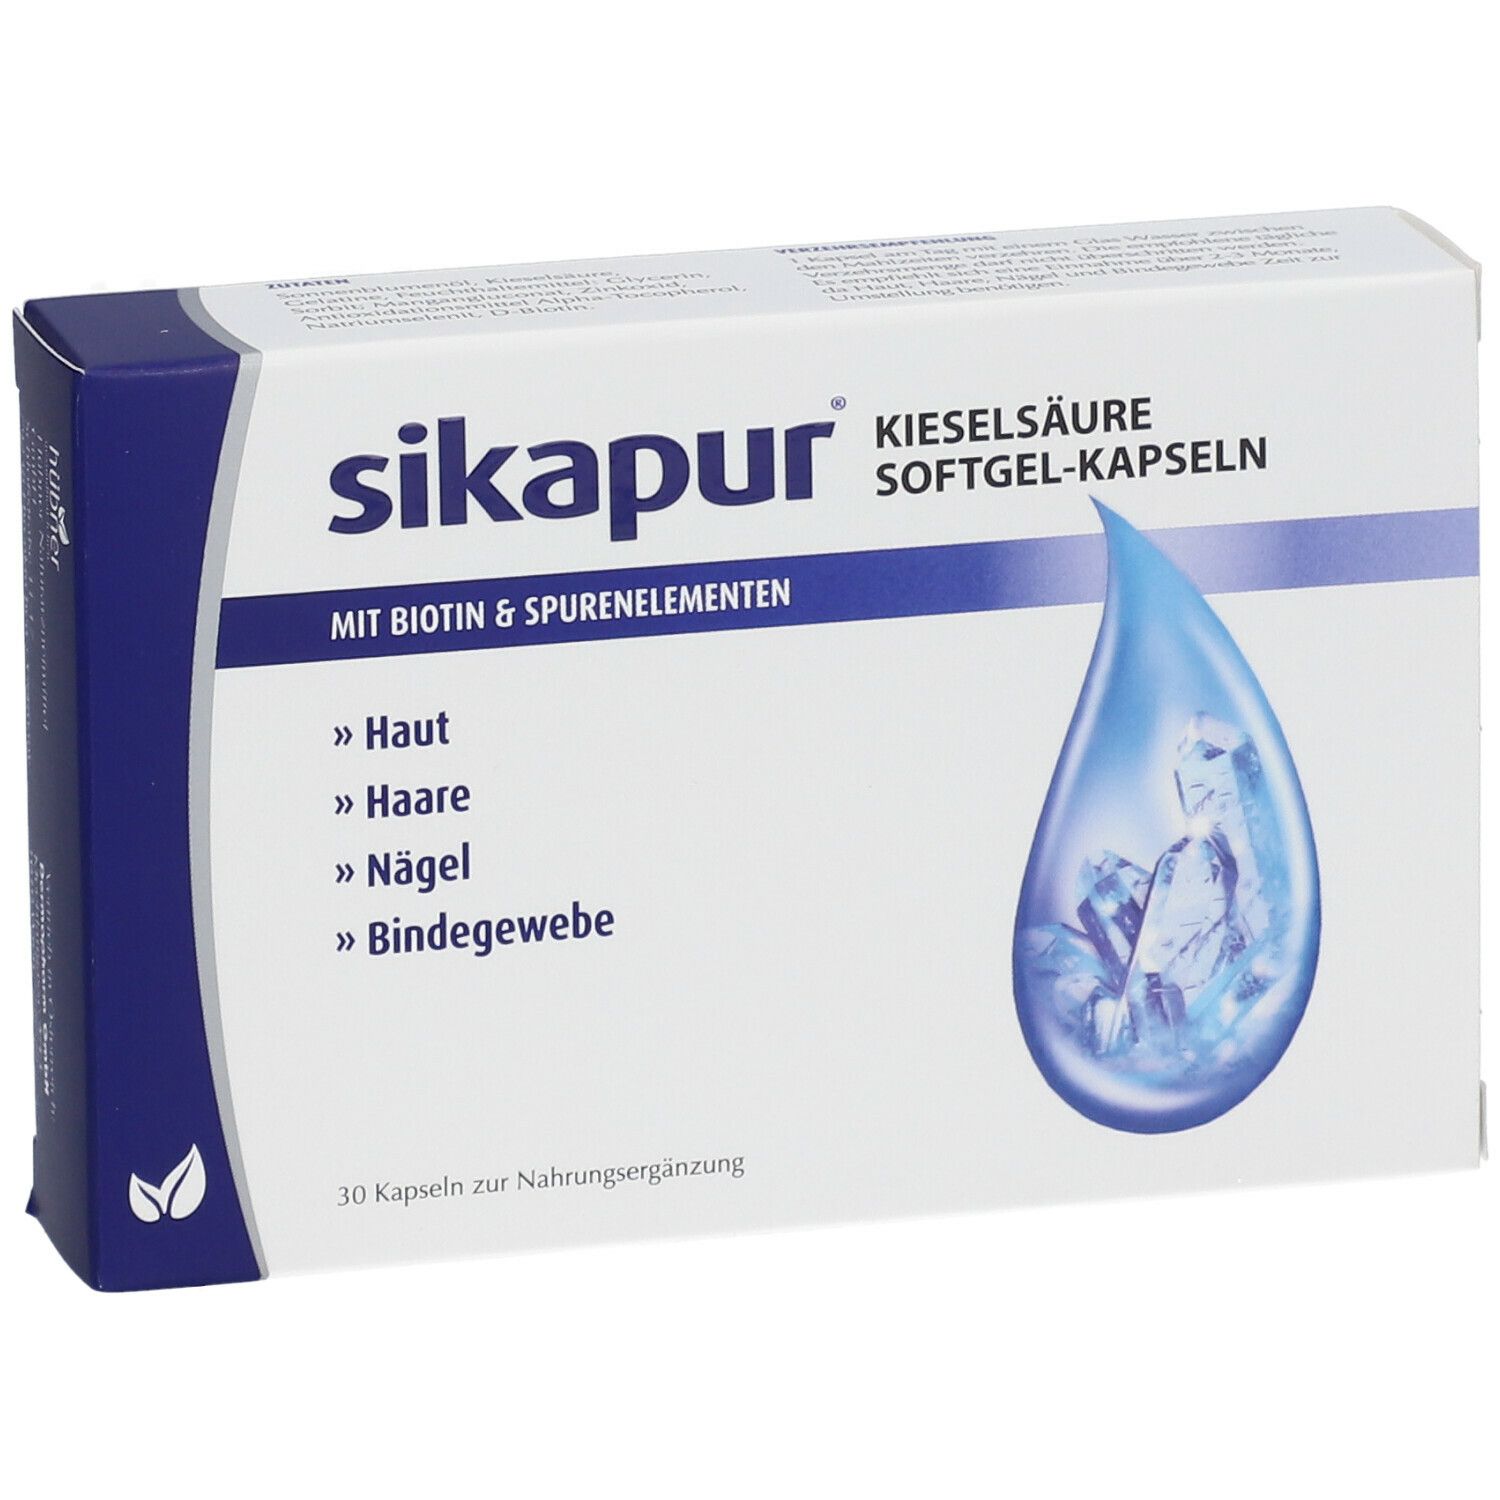 sikapur® Kieselsäure Softgel-Kapseln